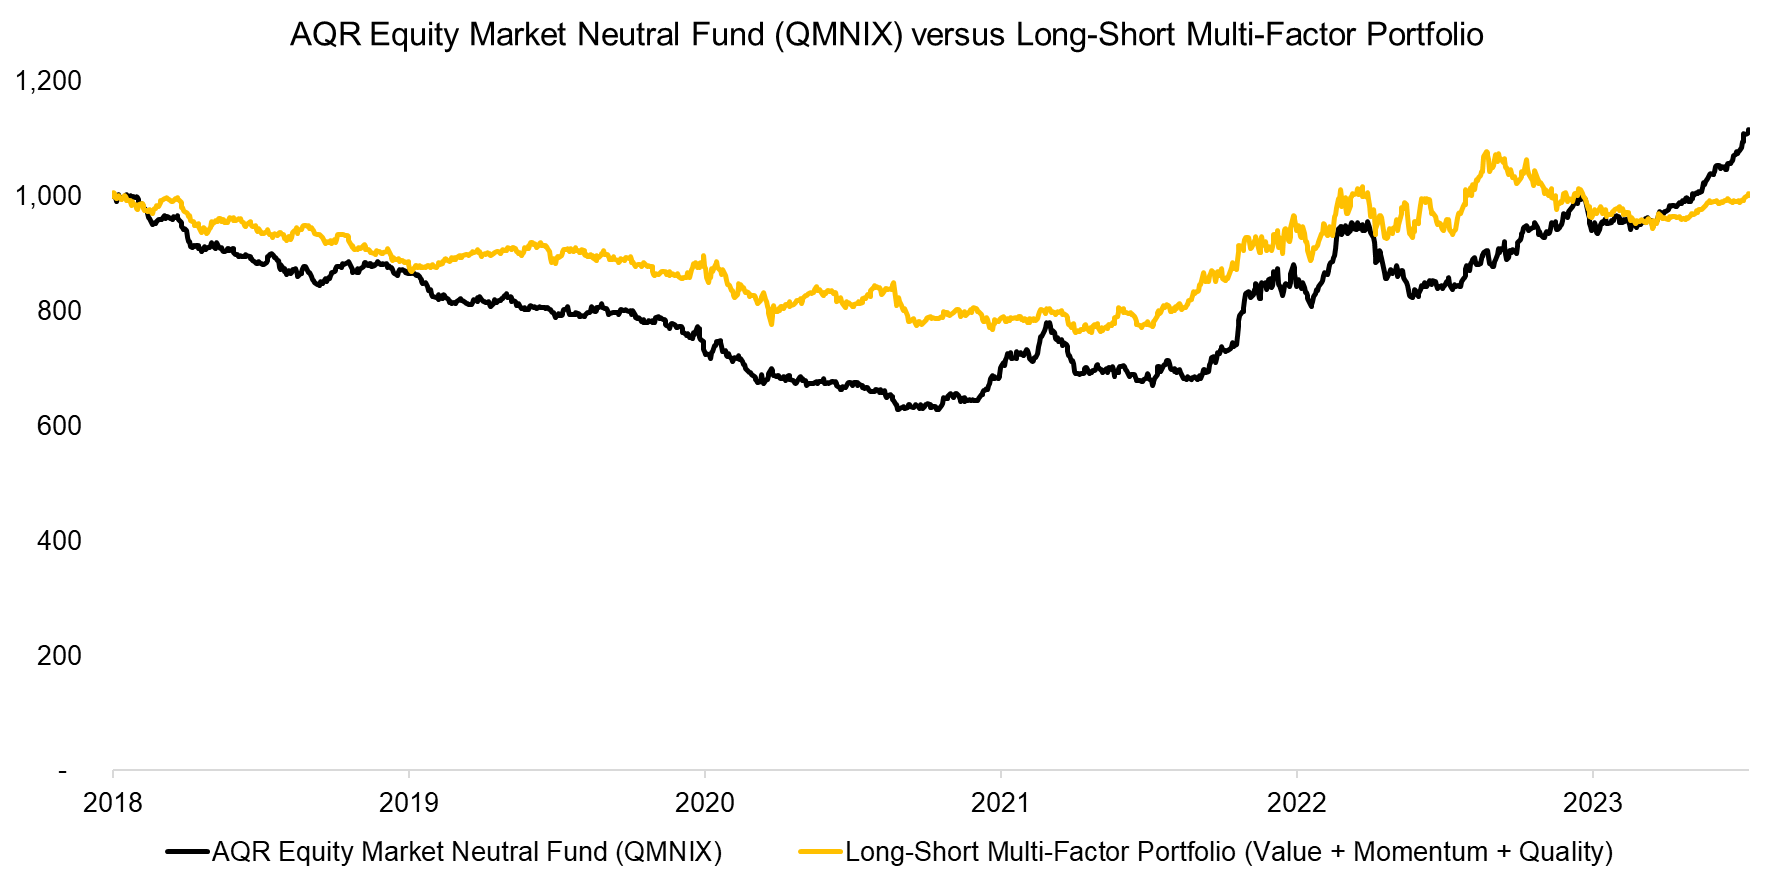 AQR Equity Market Neutral Fund (QMNIX) versus Long-Short Multi-Factor Portfolio